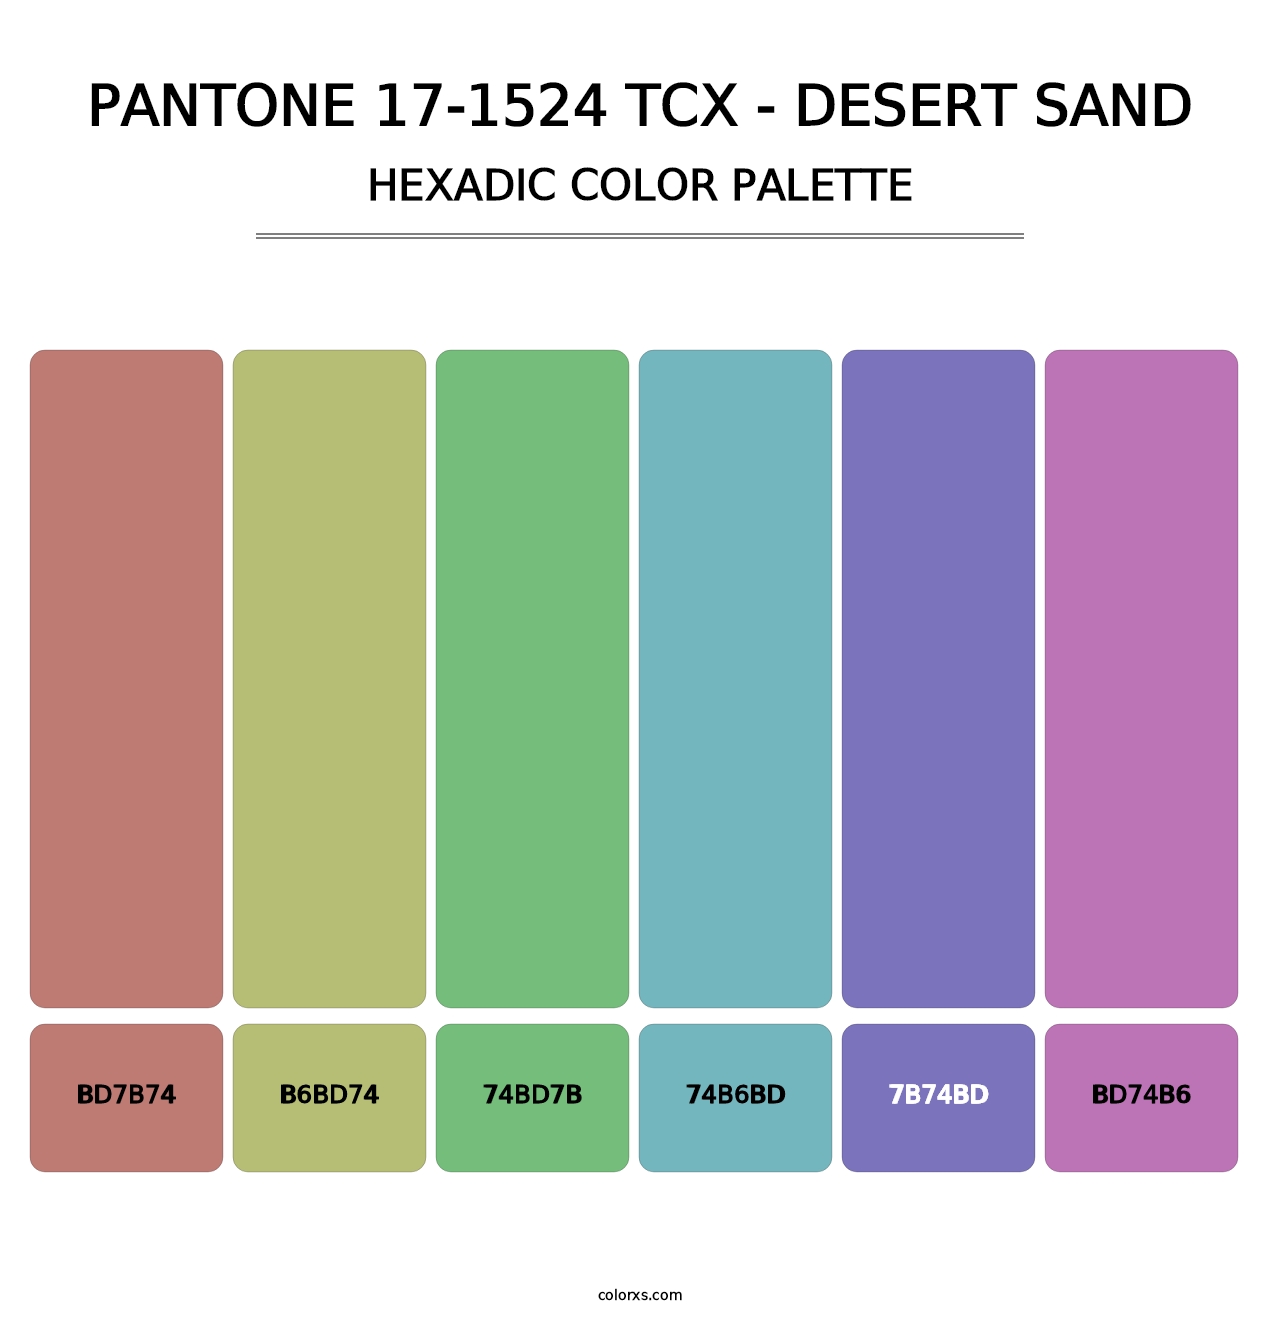 PANTONE 17-1524 TCX - Desert Sand - Hexadic Color Palette